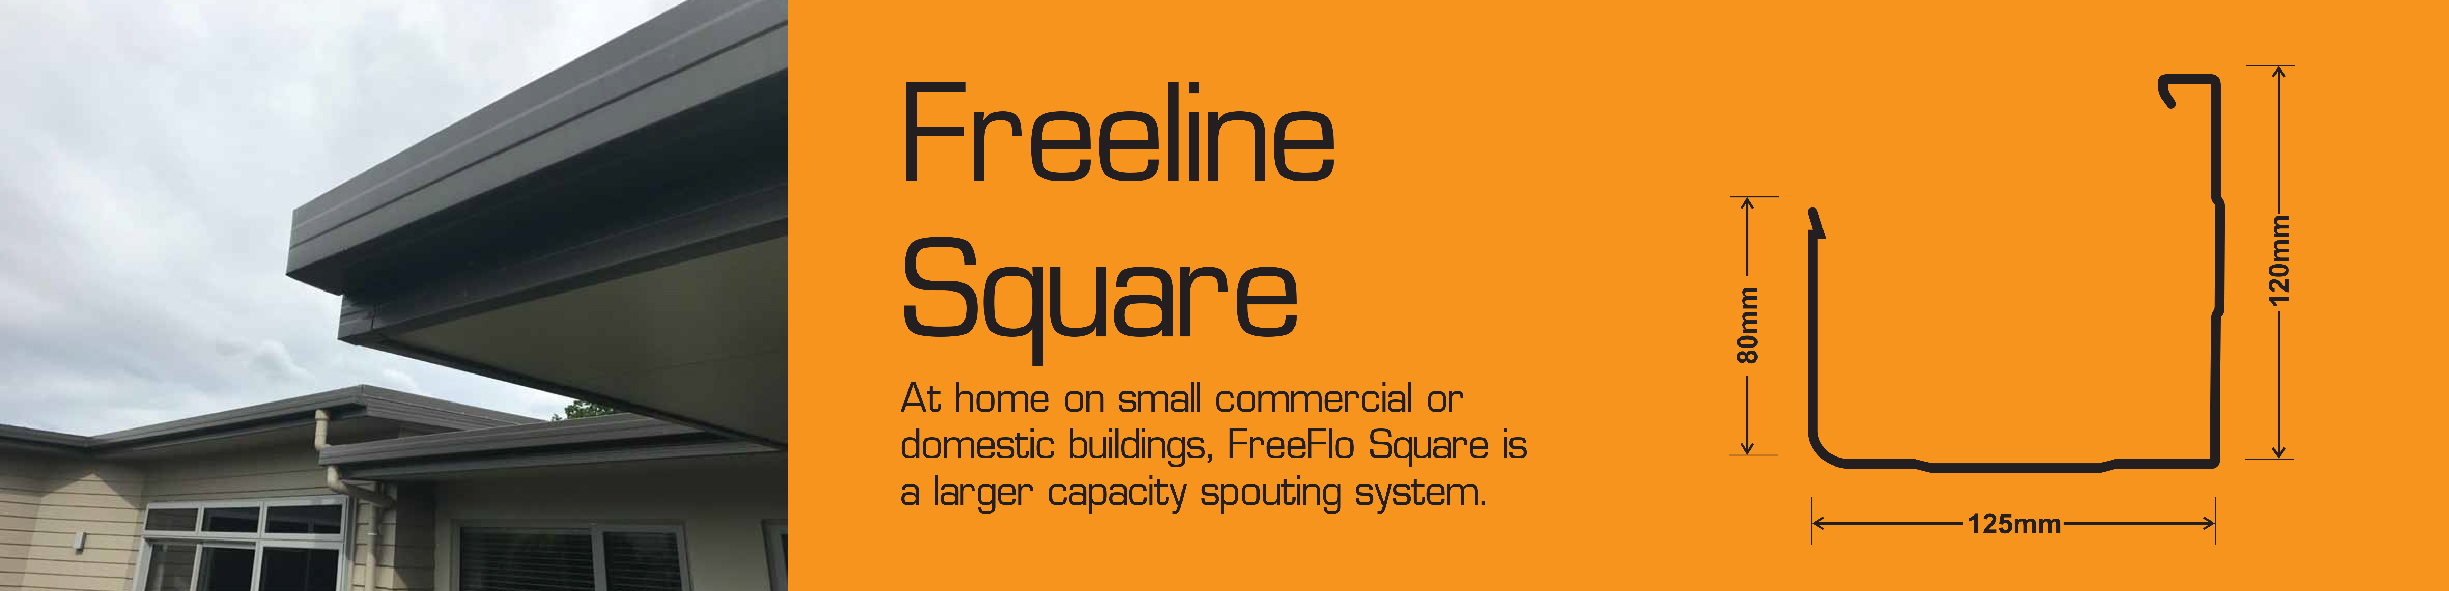 Freeline-Square.jpg